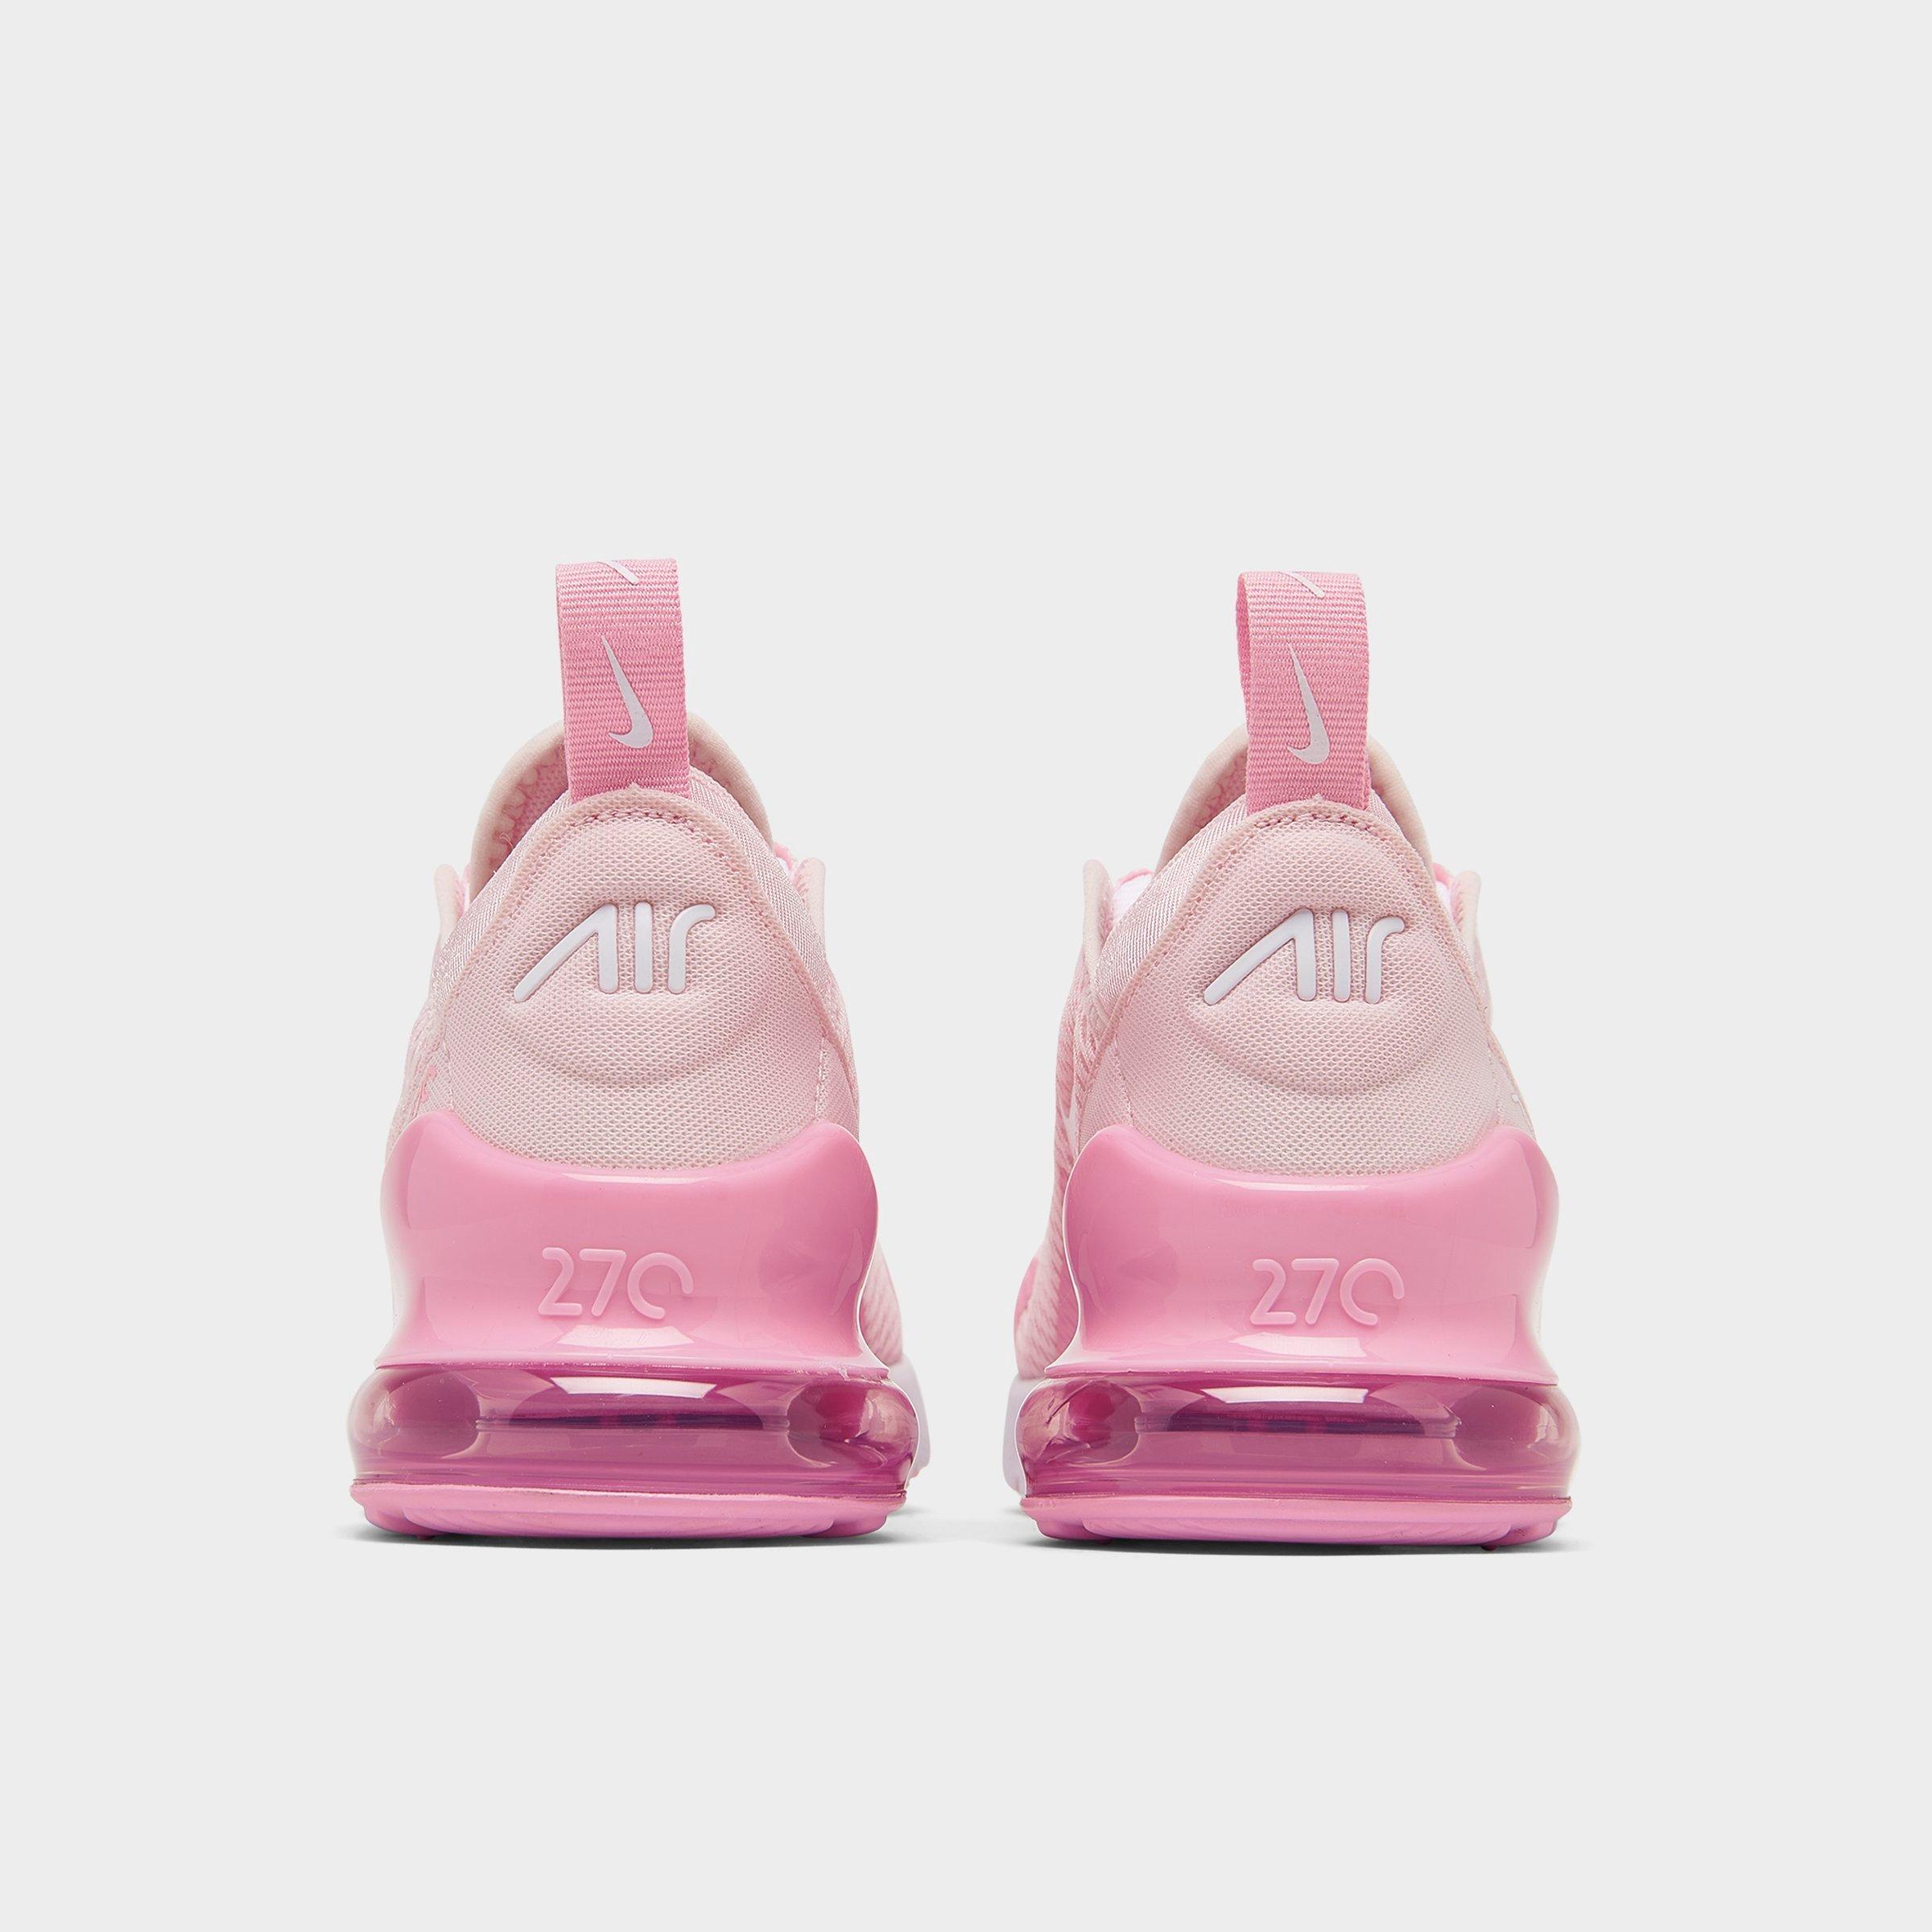 air max 270 girls pink